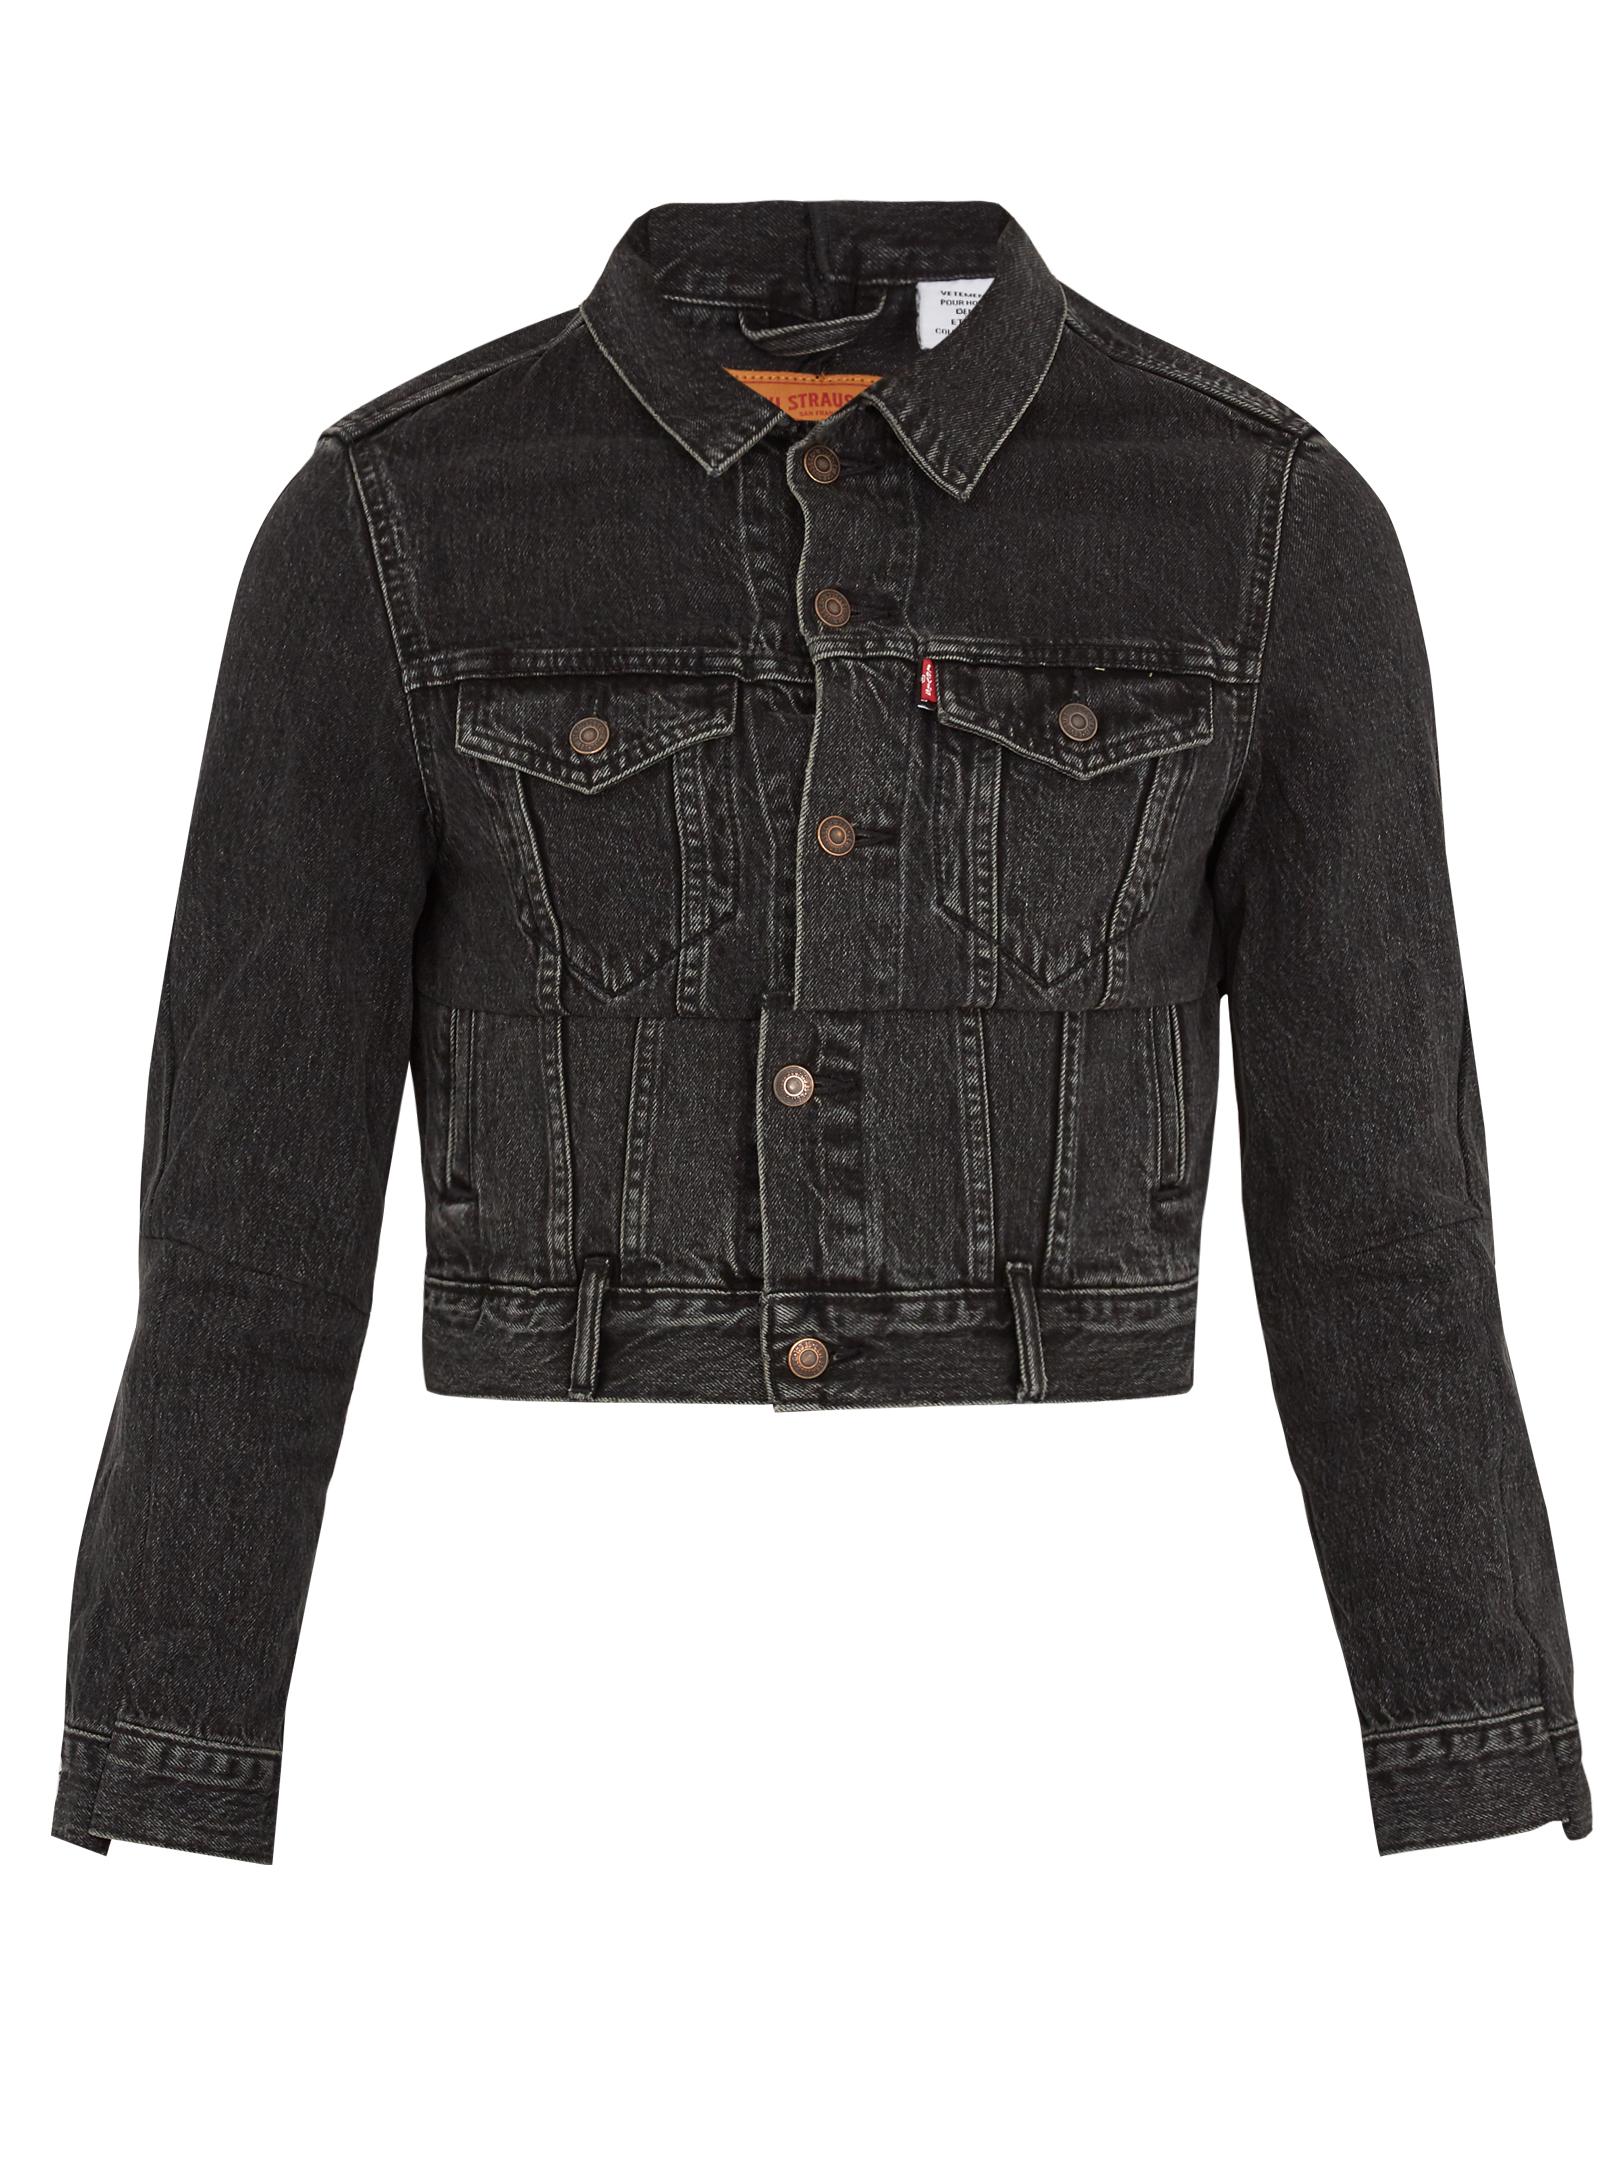 Vetements X Levi's Reworked Cropped Denim Jacket in Black for Men | Lyst